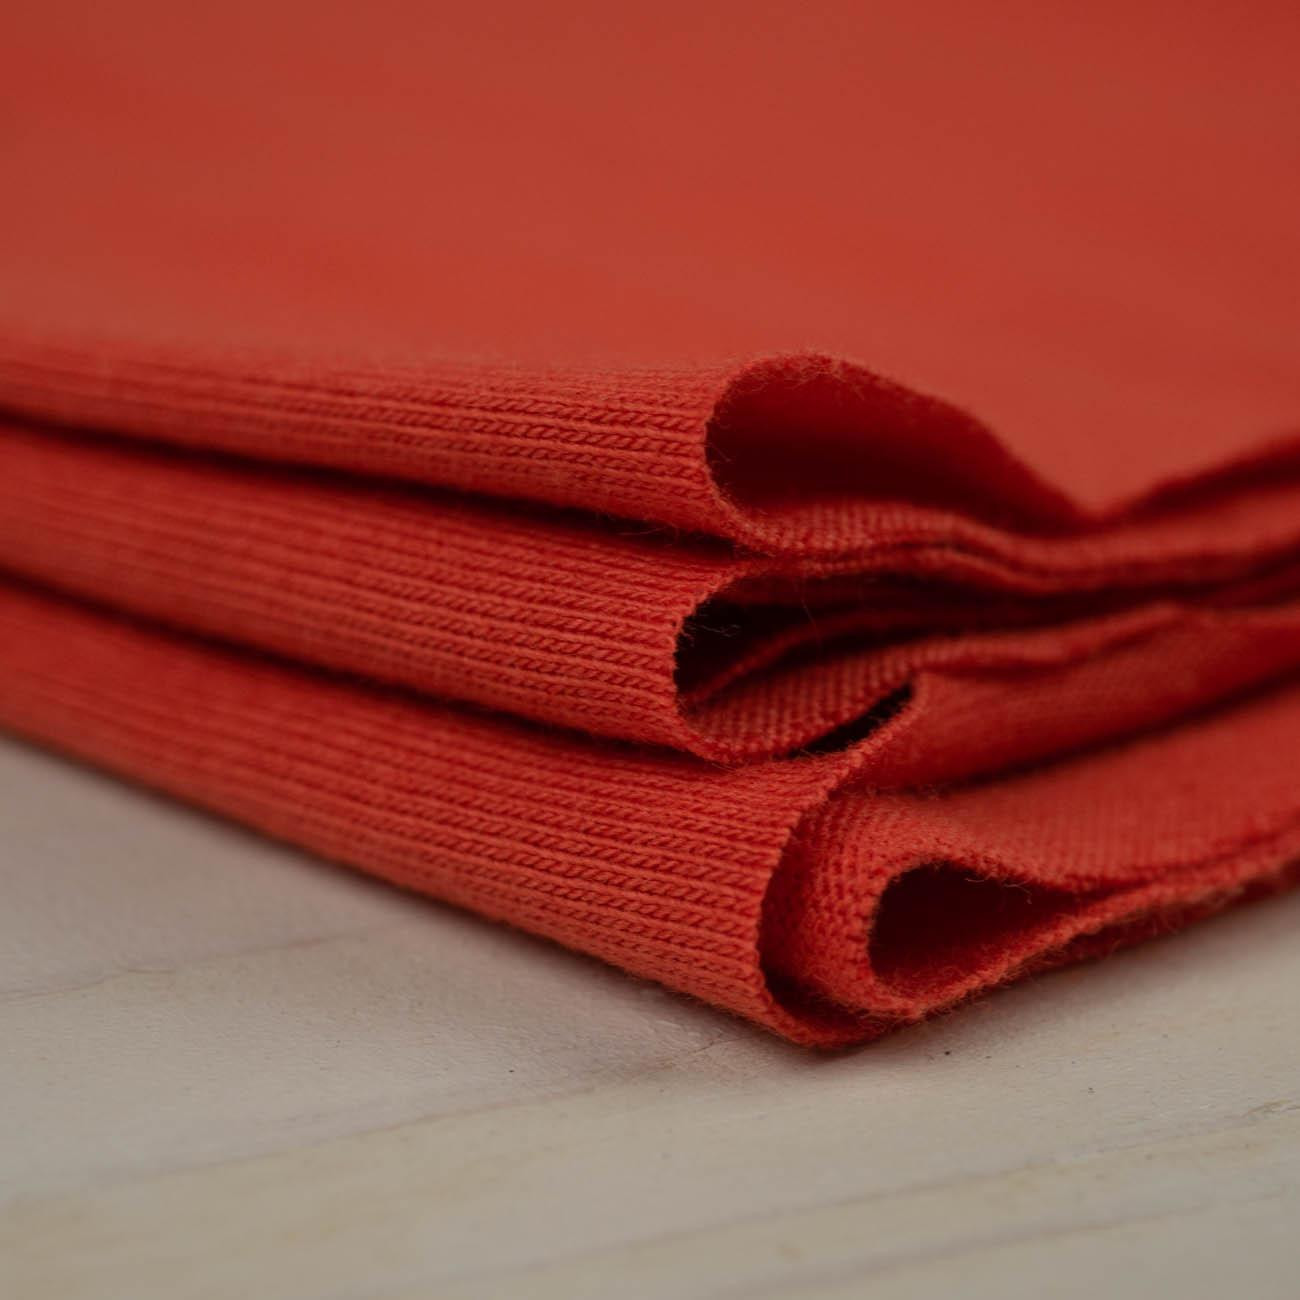 B-24 FIESTA / light red - T-shirt knit fabric 100% cotton T180